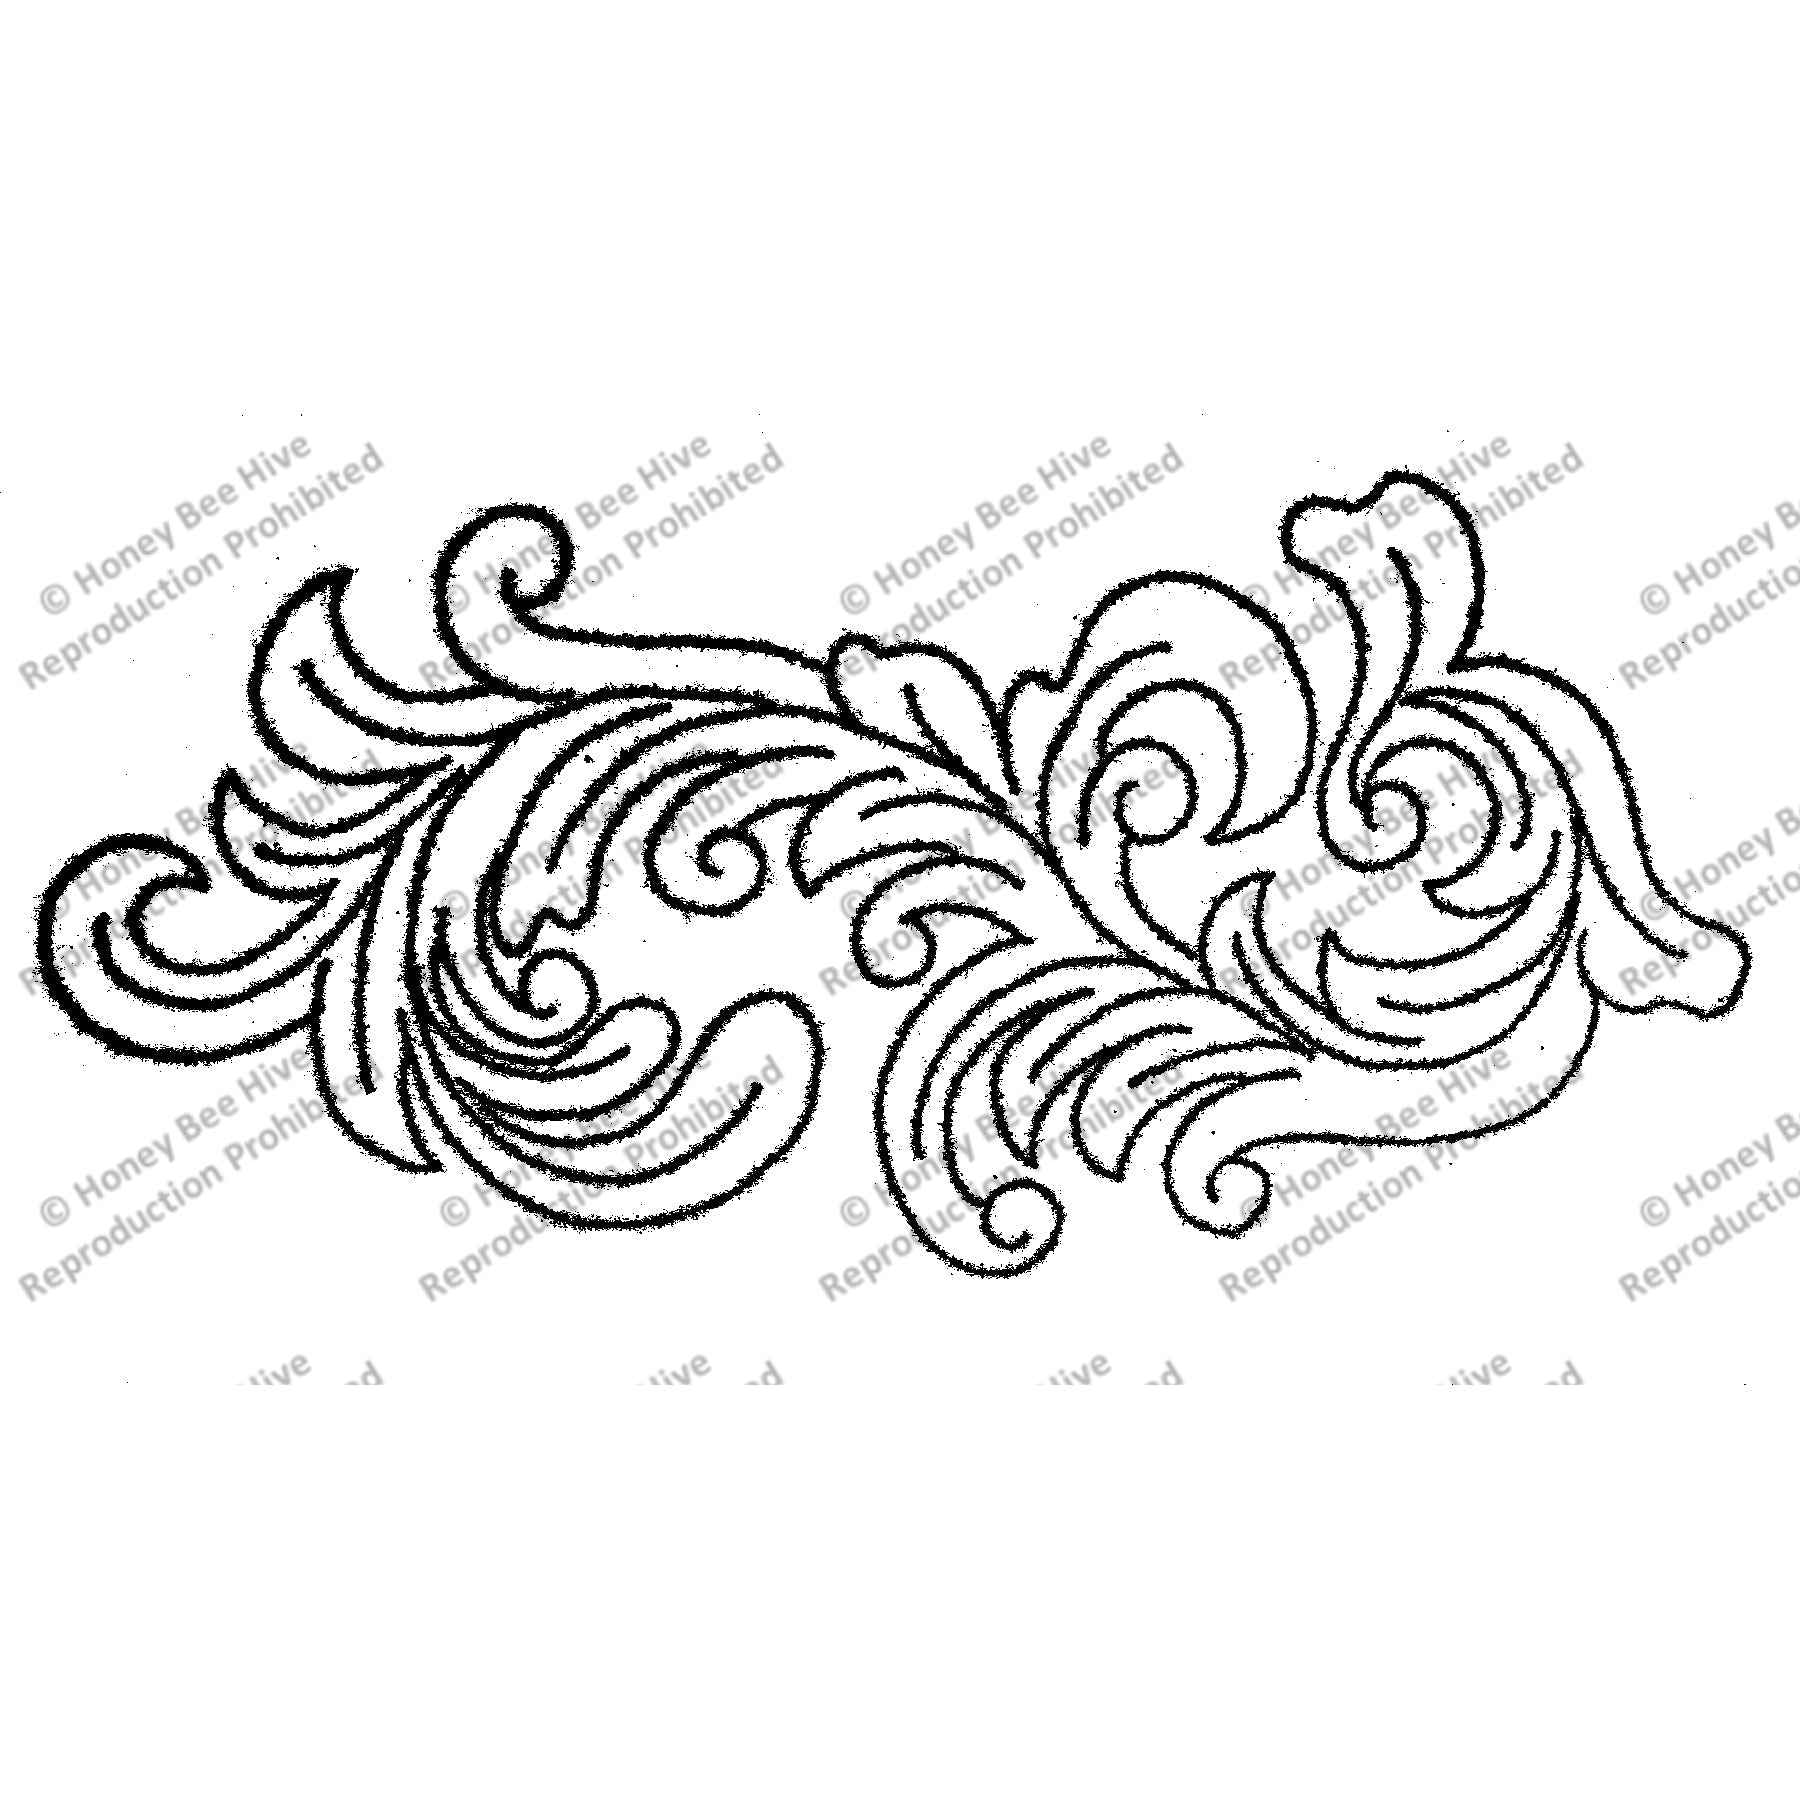 Victorian Scroll, rug hooking pattern